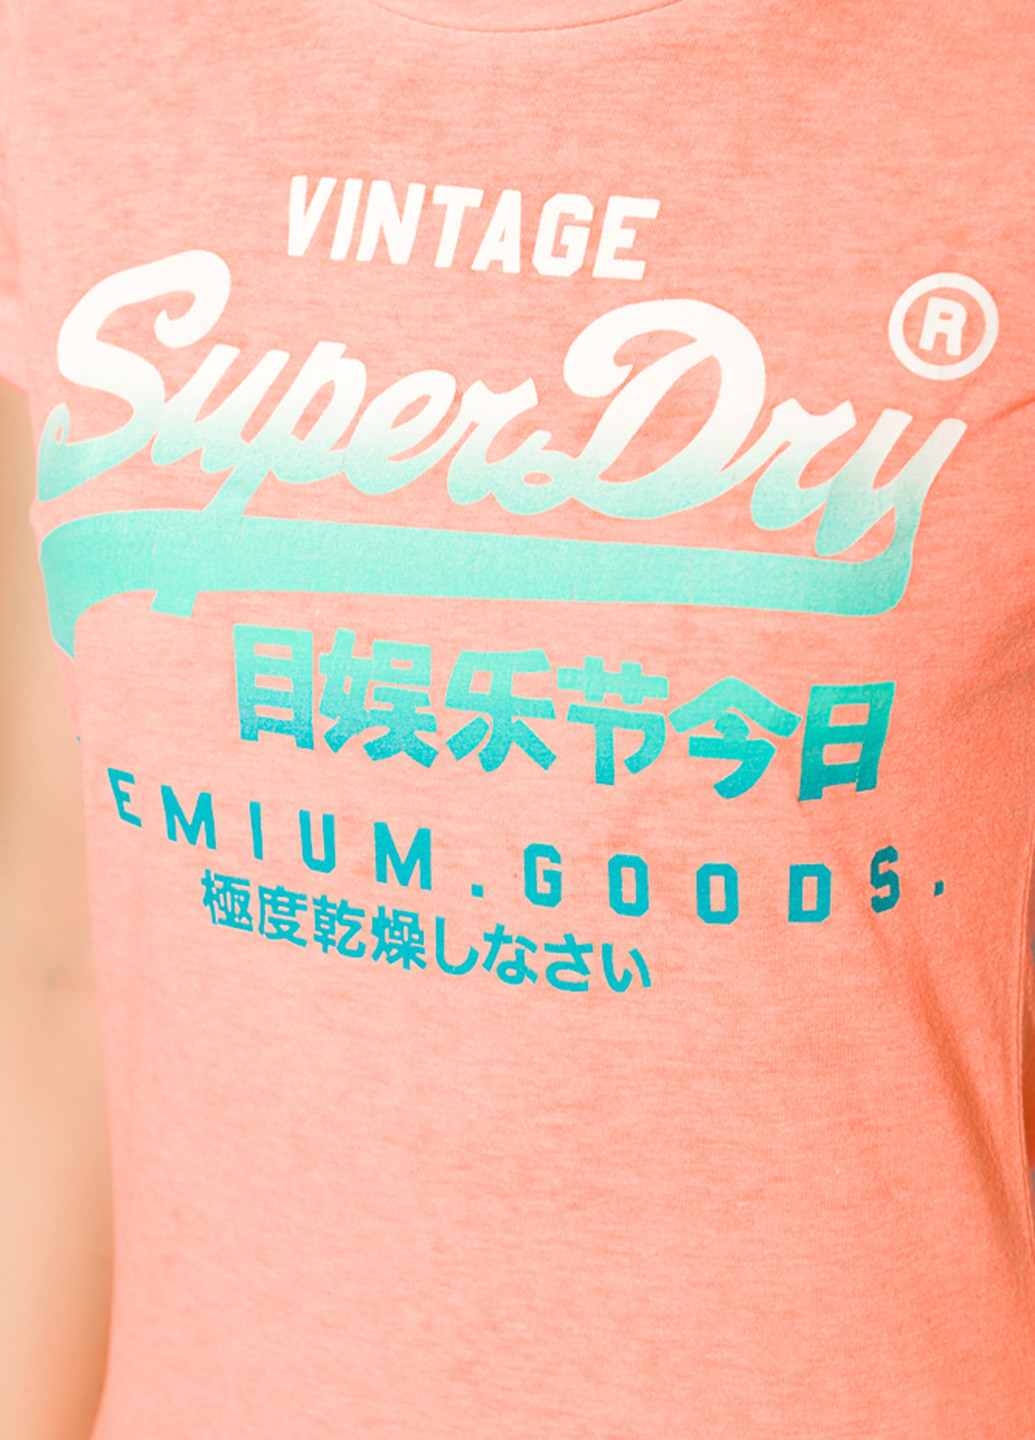 Оранжевая летняя футболка Super Dry